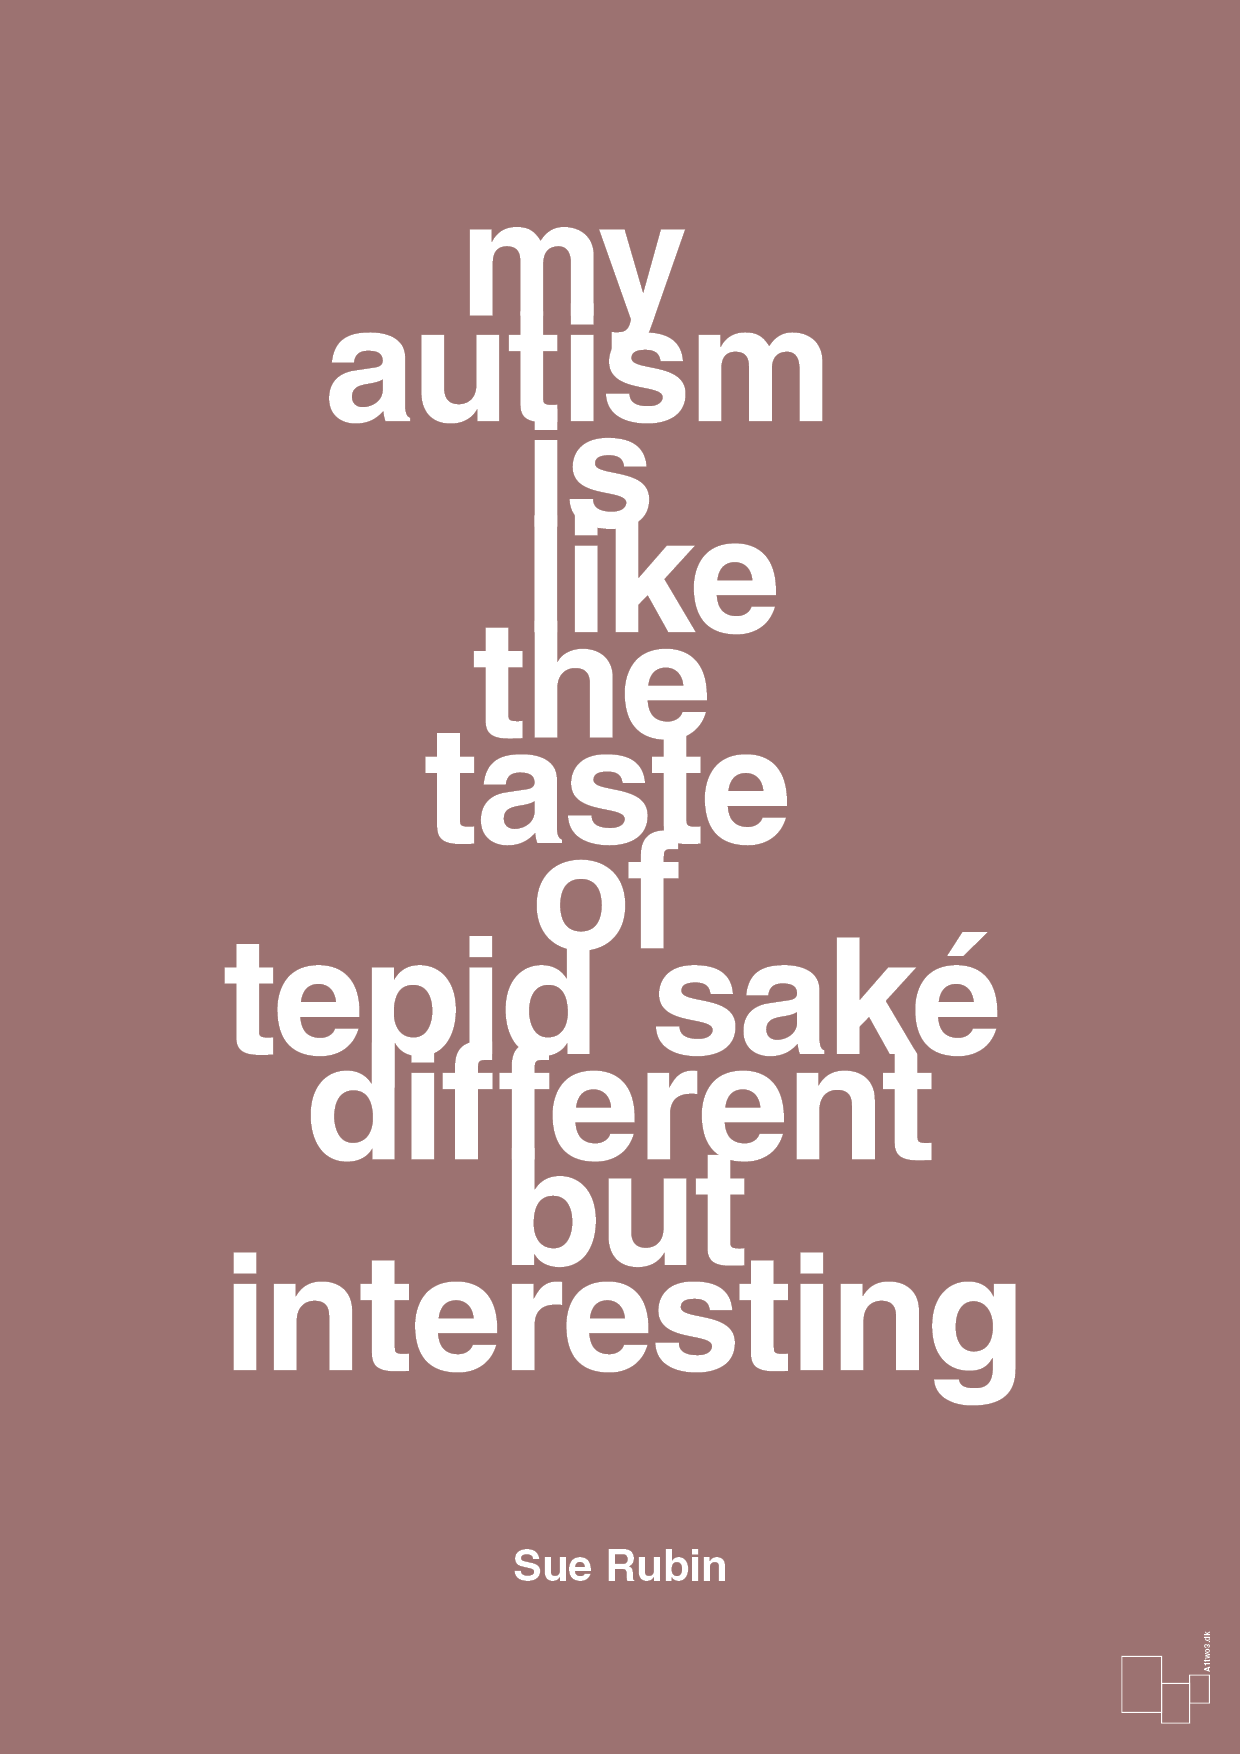 my autism is like the taste of tepid saké different but interesting - Plakat med Samfund i Plum